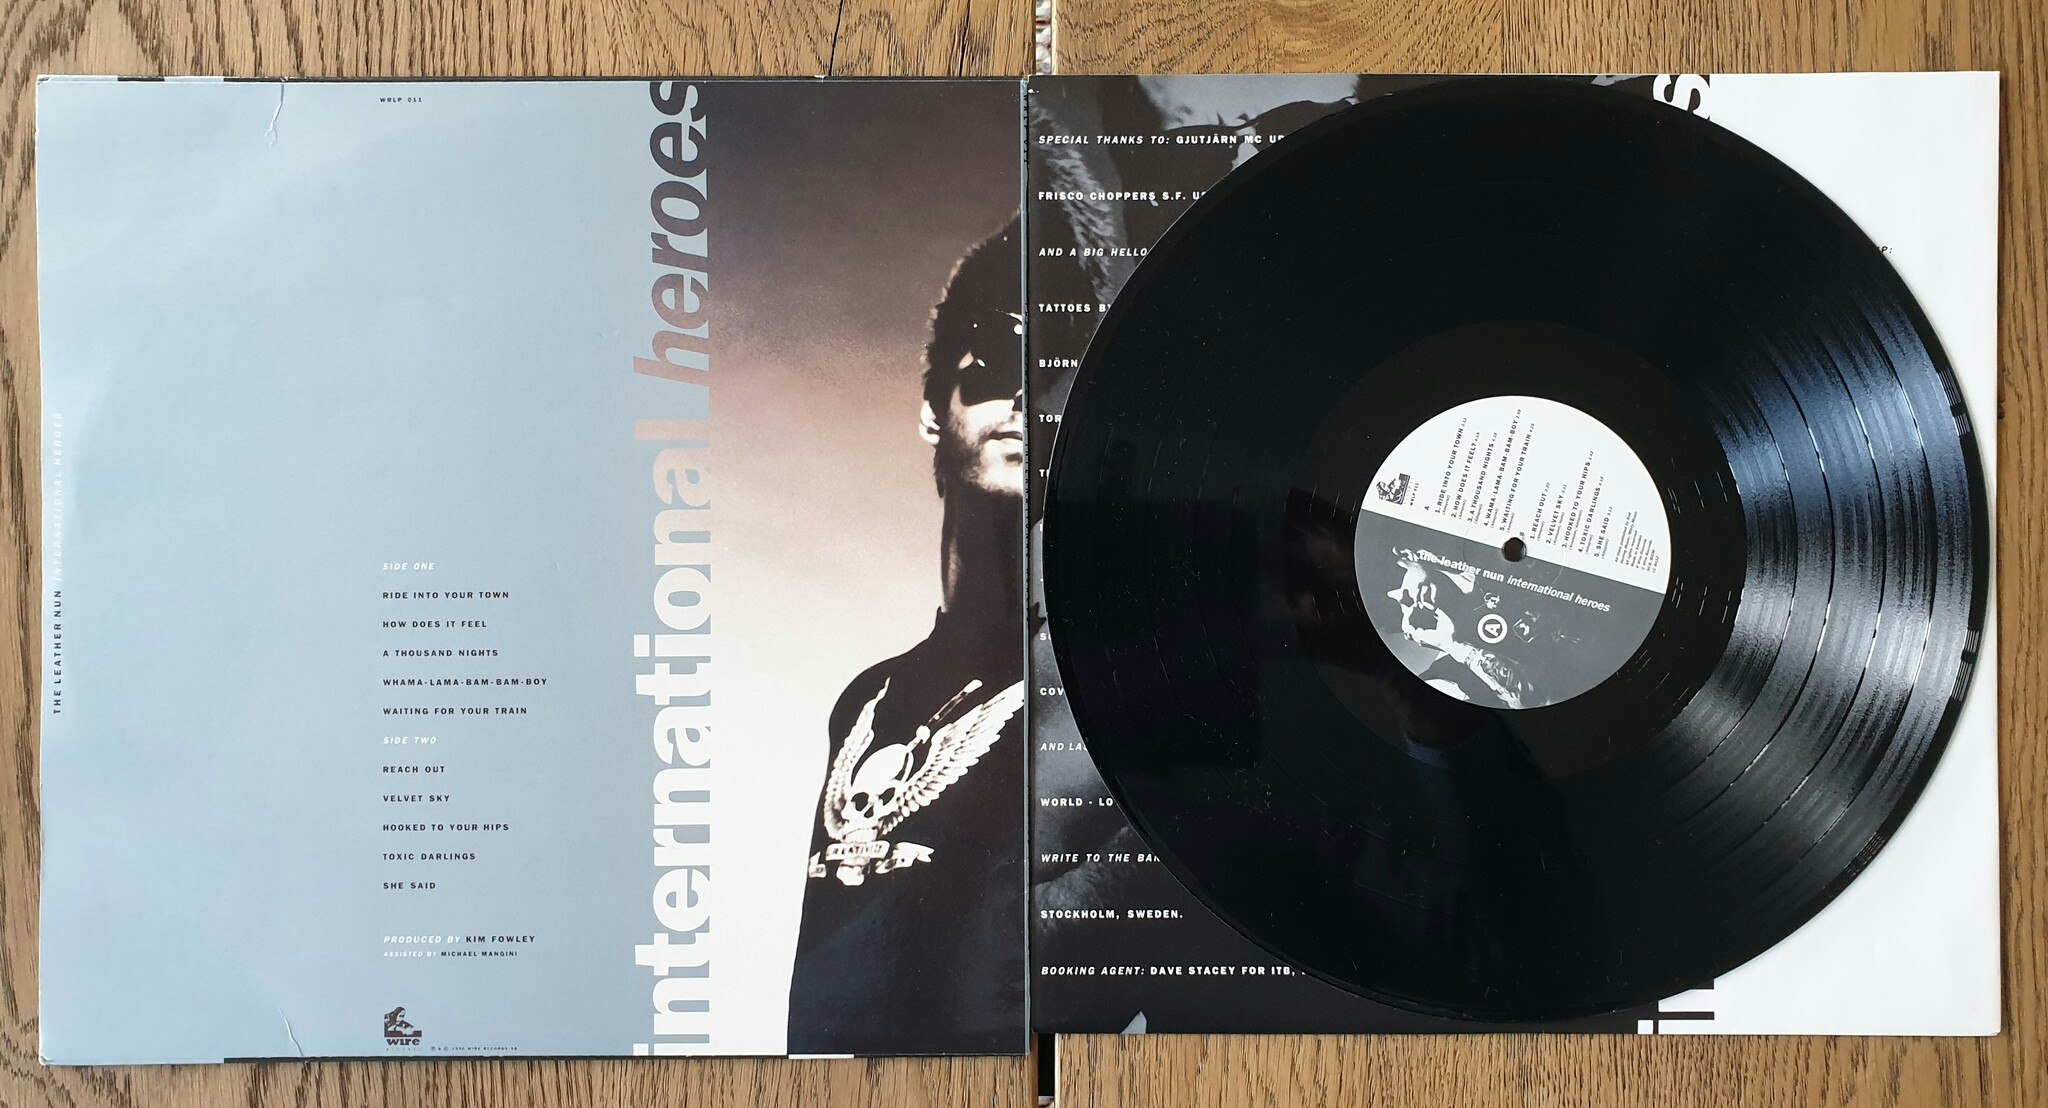 The Leather Nun, International heroes. Vinyl LP